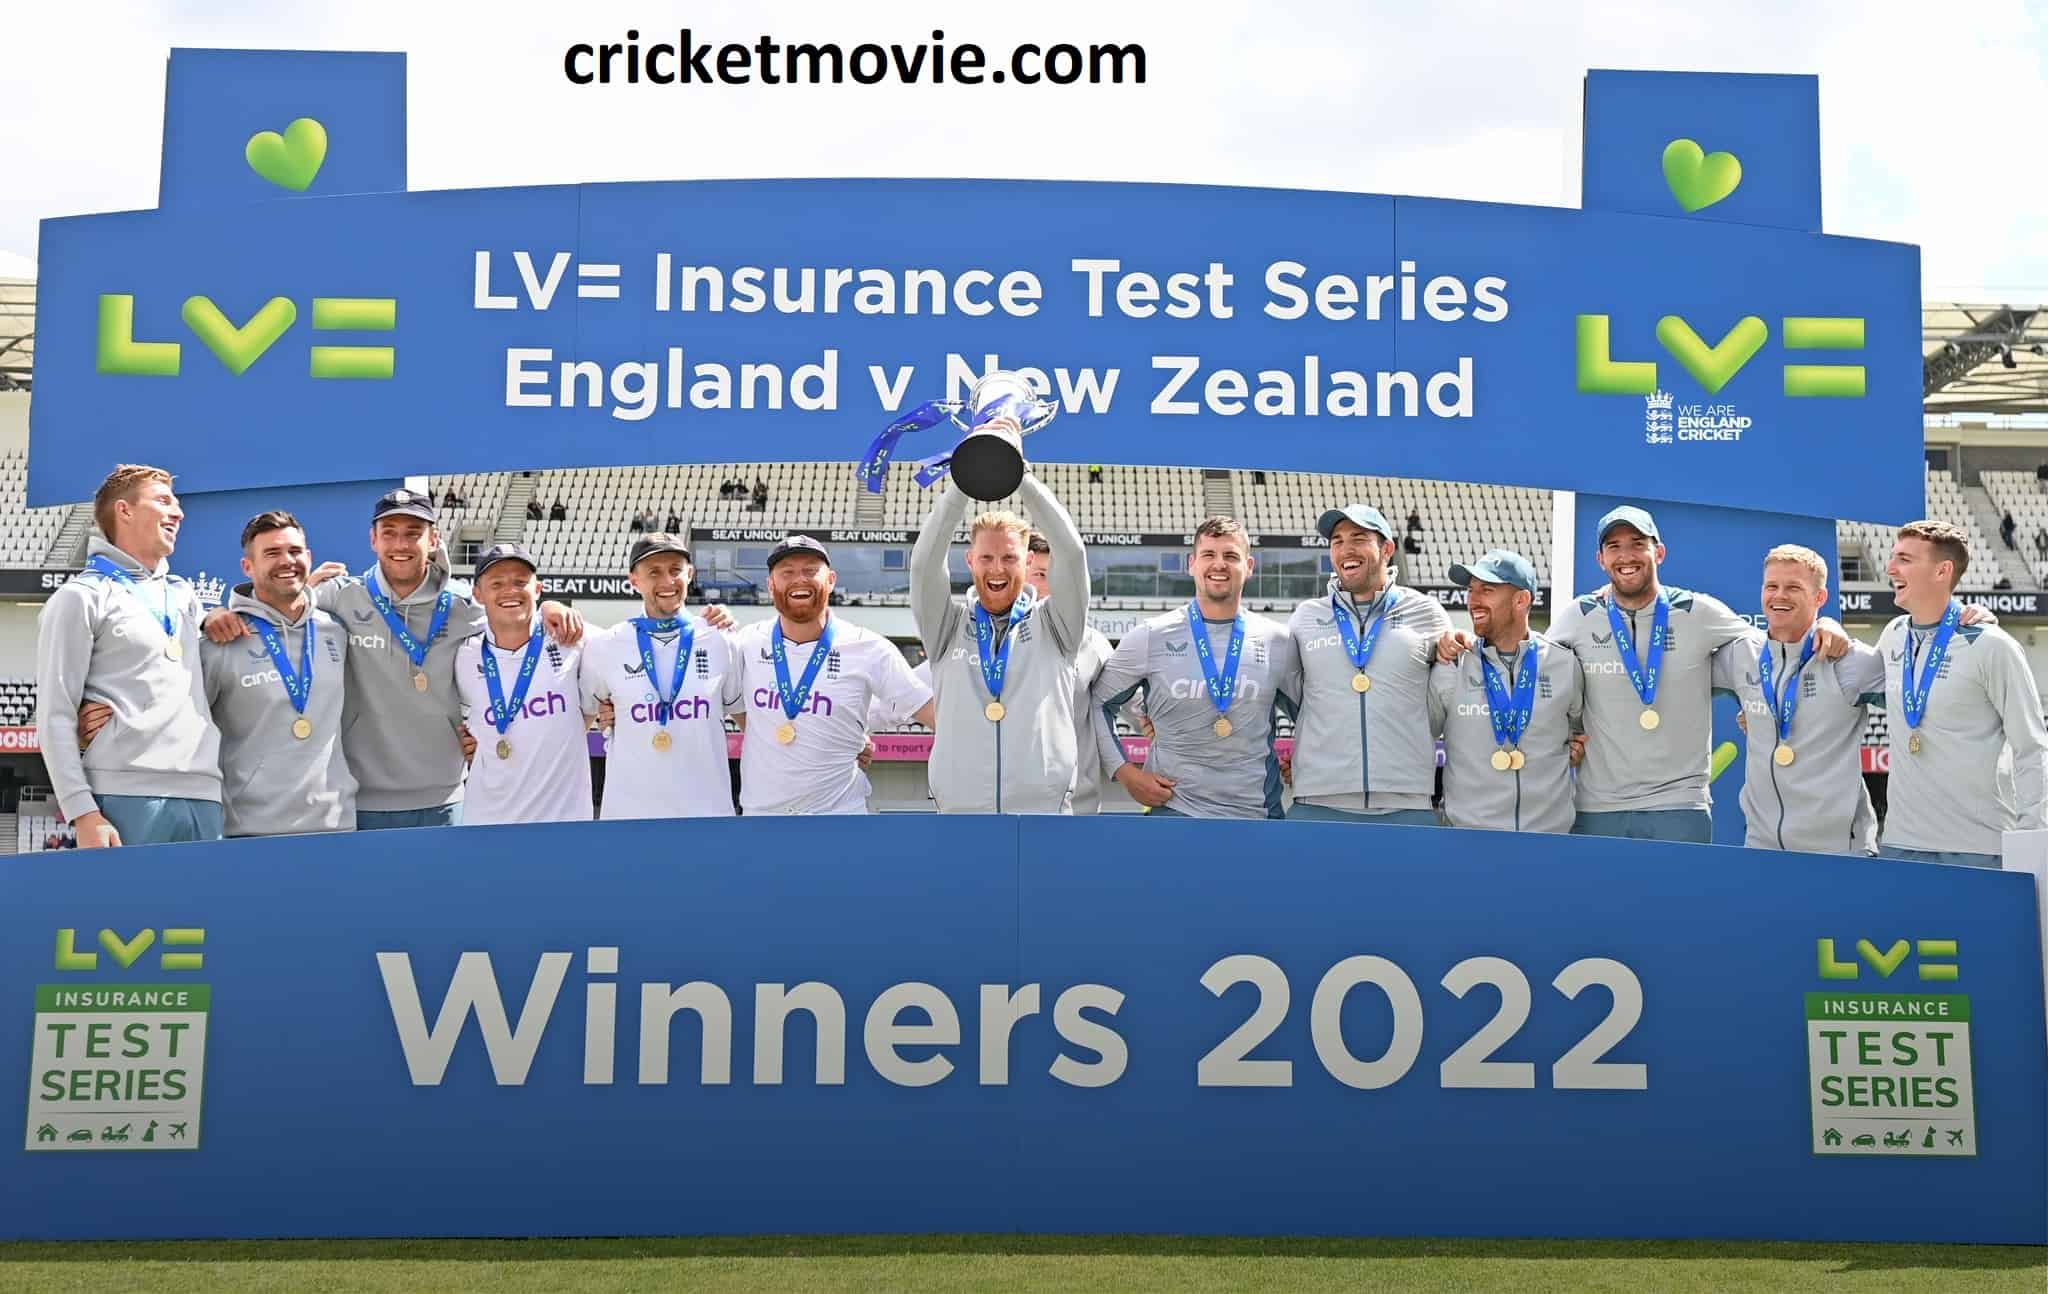 England clean sweep New Zealand in Test series-cricketmovie.com